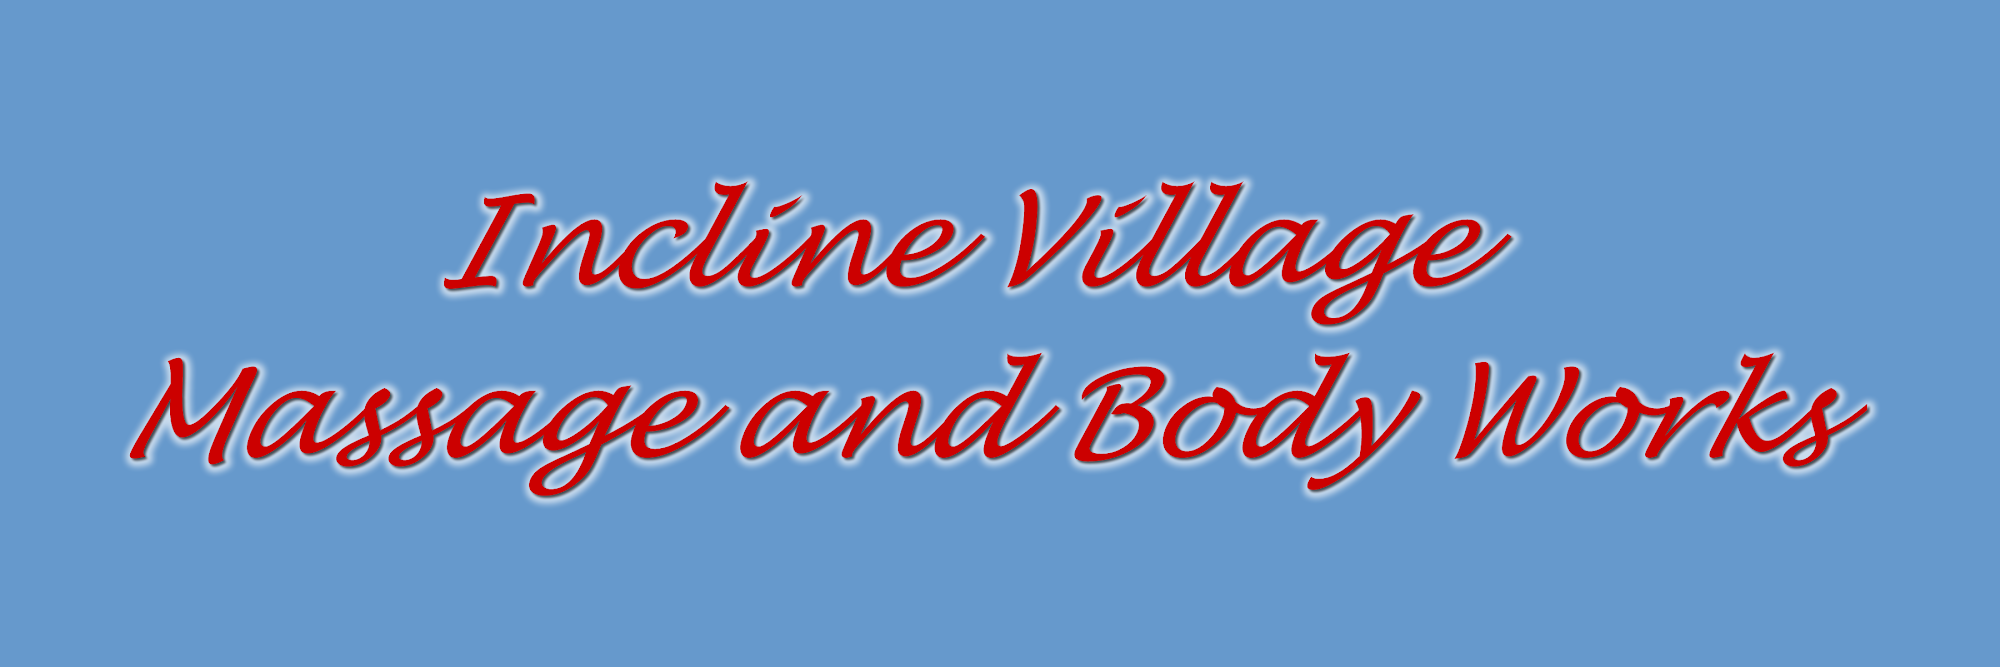 Incline Village Massage and Body Works 865 Tahoe Blvd suite 105, Incline Village Nevada 89451